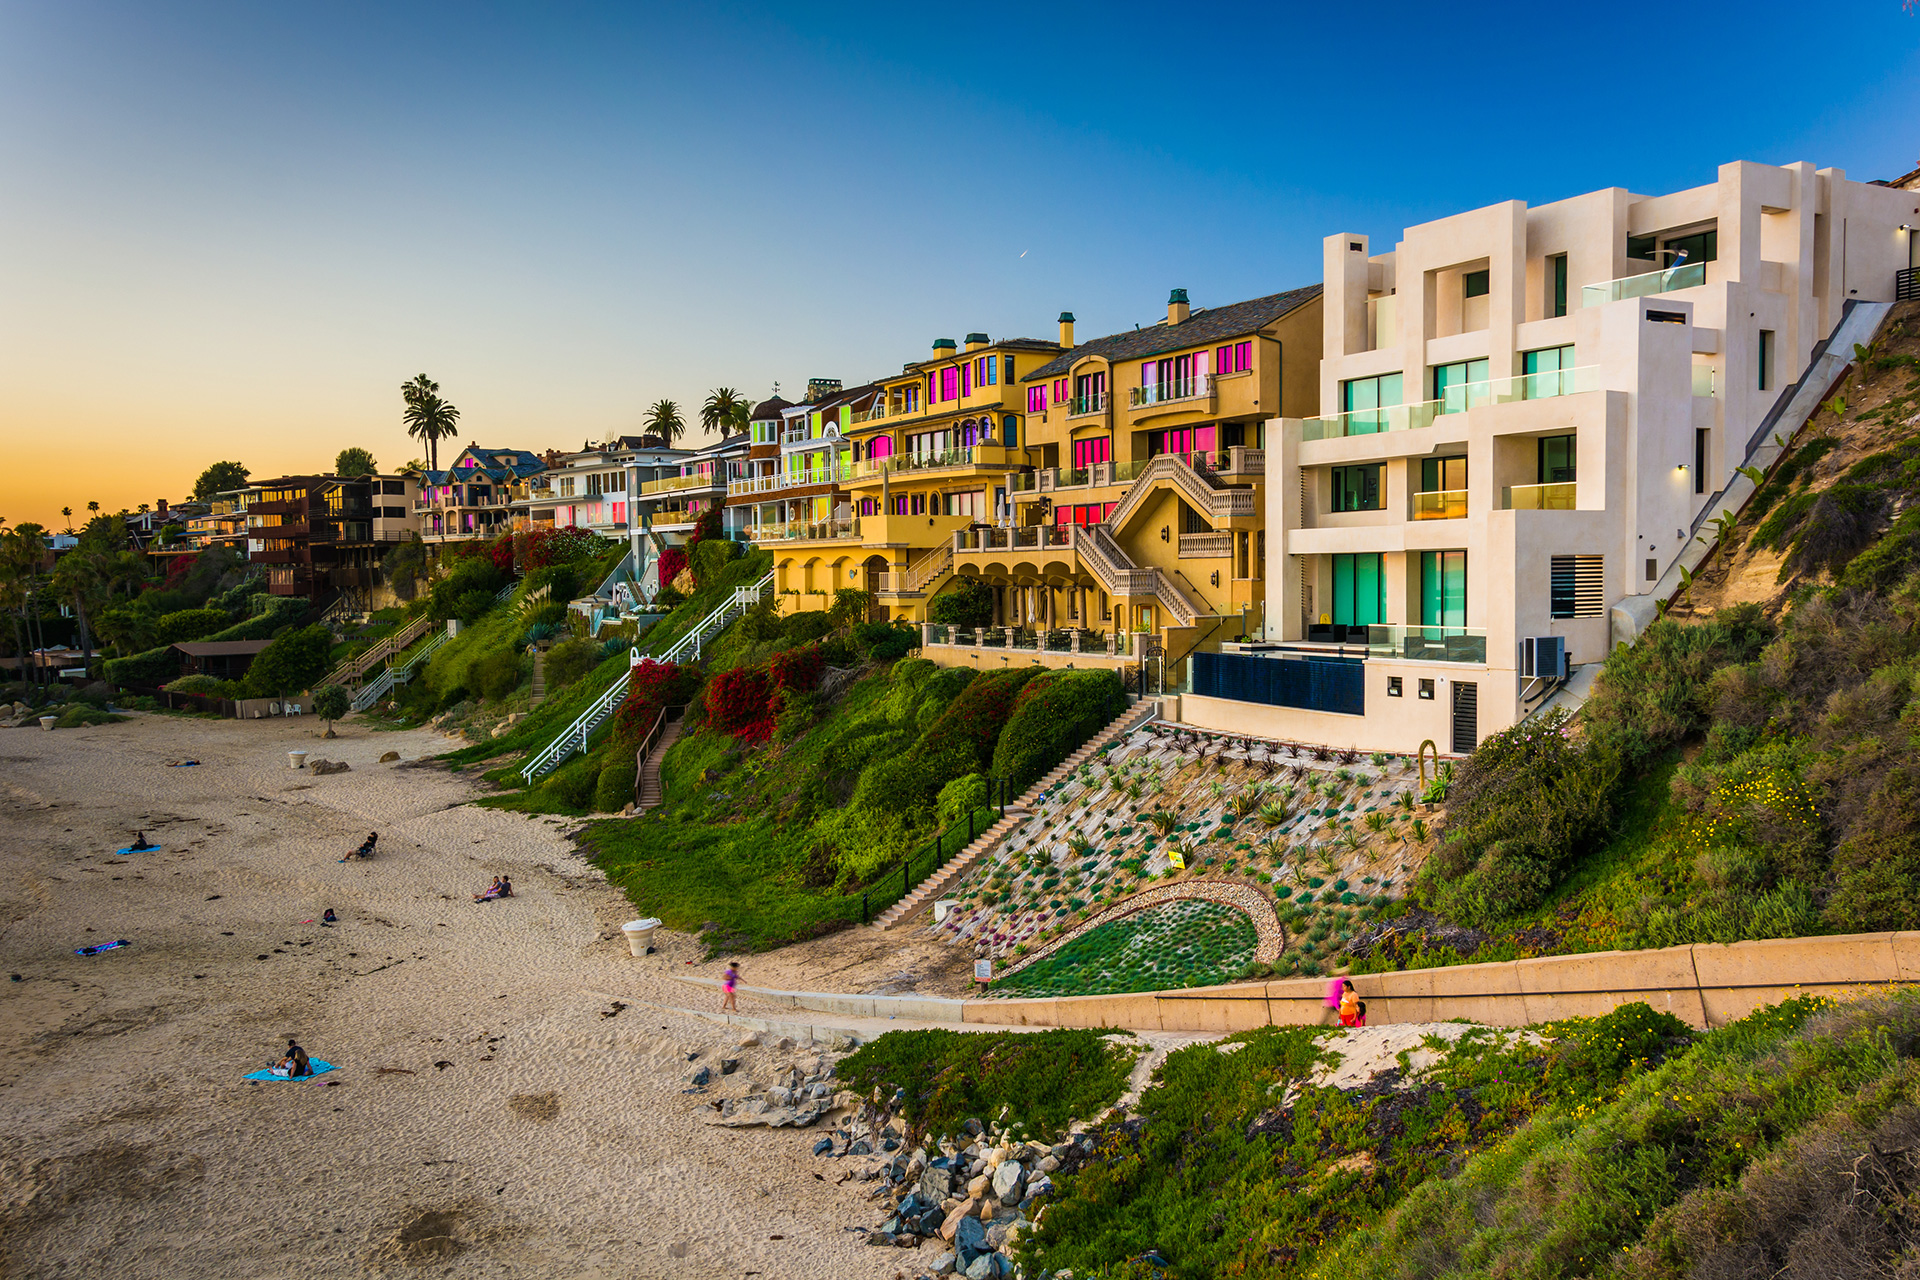 Houses on cliffs above Corona Del Mar State Beach. ; Courtesy of Jon Bilous/Shutterstock